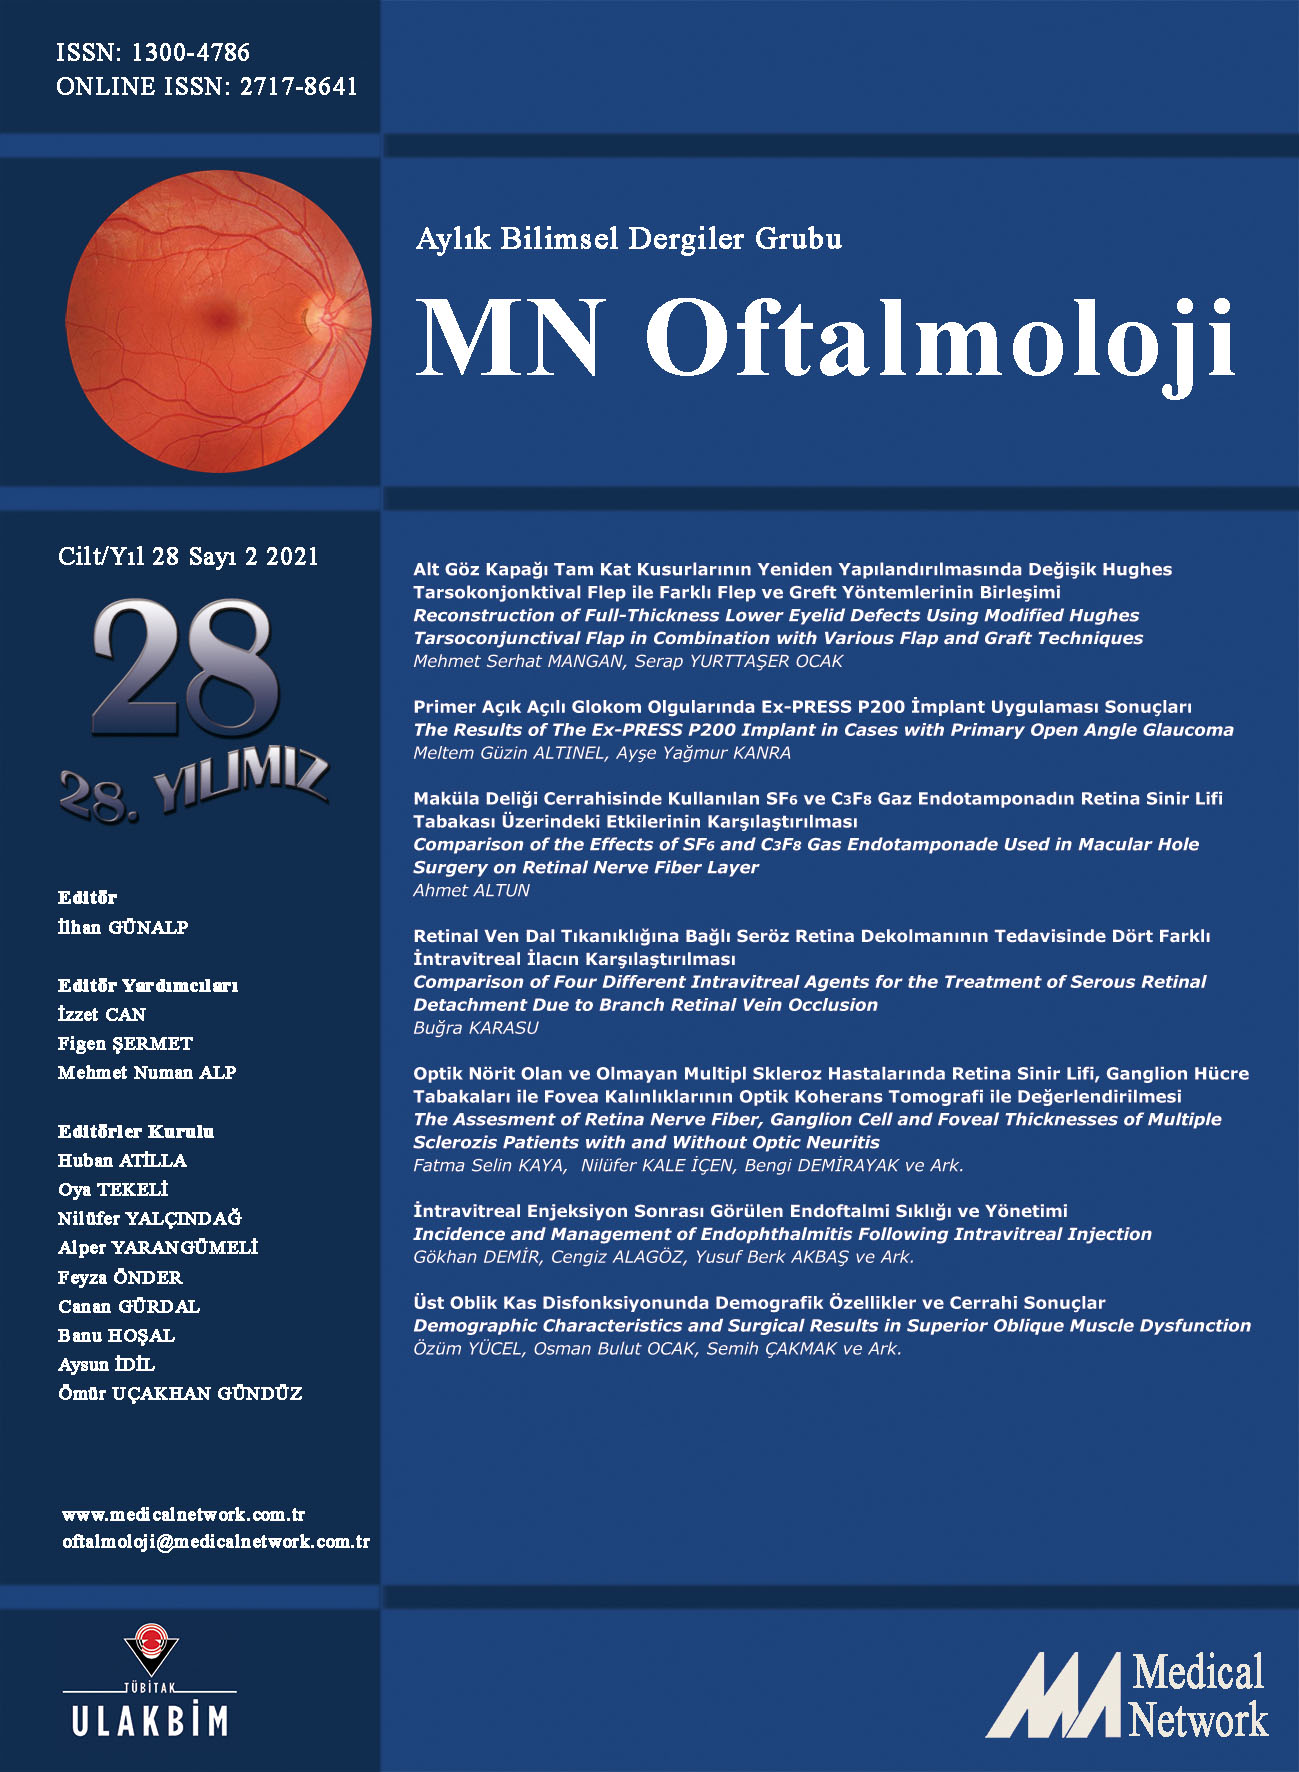 <p>MN Oftalmoloji Cilt: 28 Say: 2 2021 (MN Ophthalmology Volume: 28 No: 2 2021)</p>